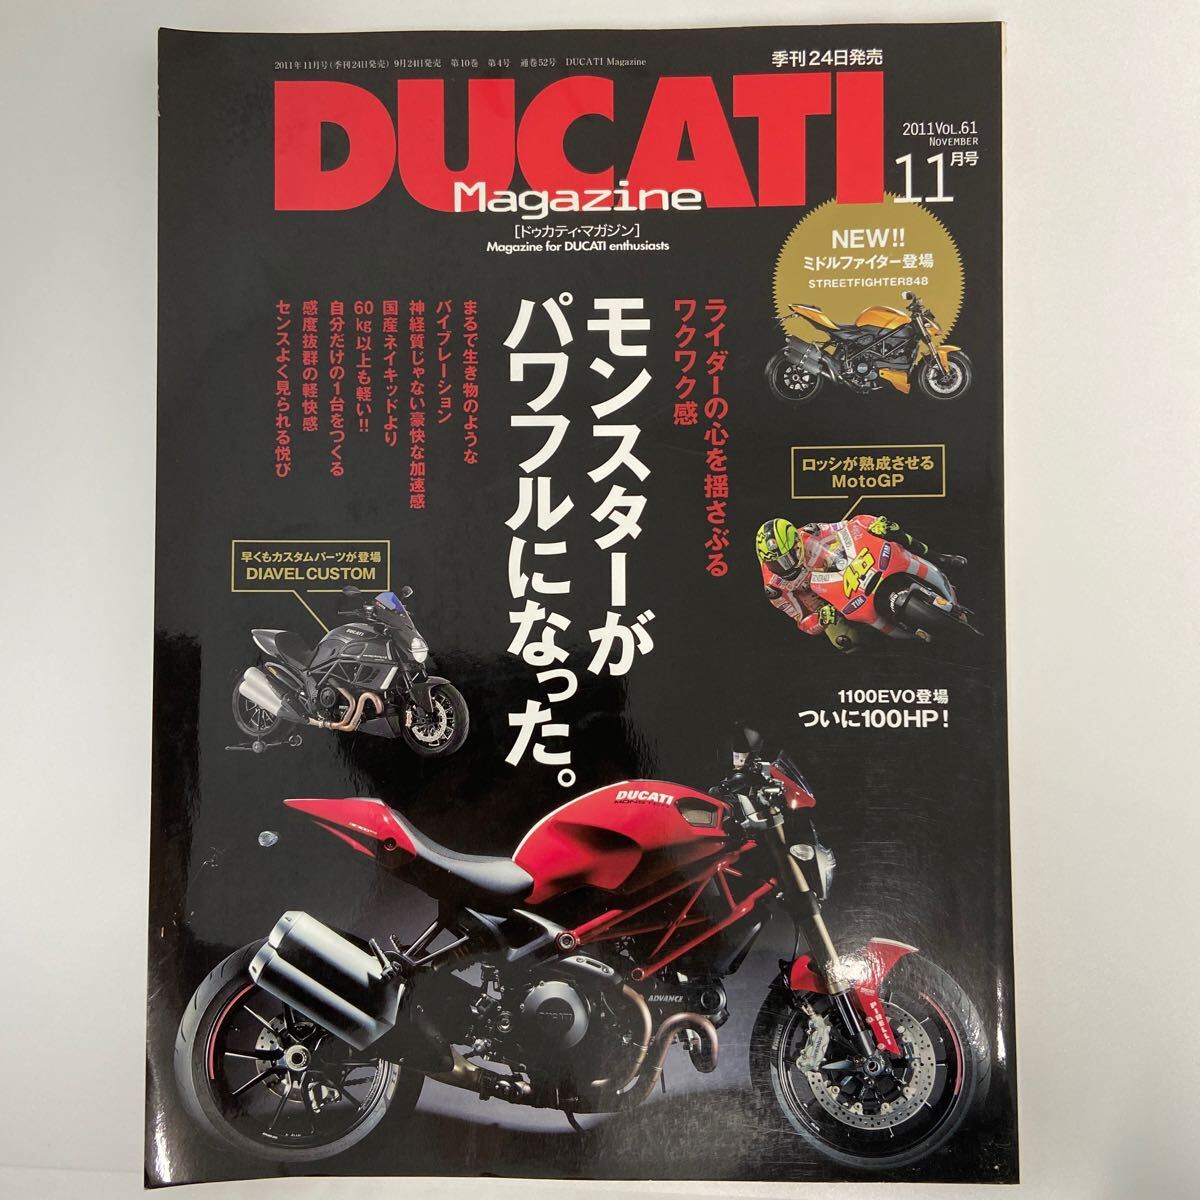 DUCATI Magazine Vol.61 Monstar . powerful became Ducati magazine MONSTER 1100 evo 696 796 bike book